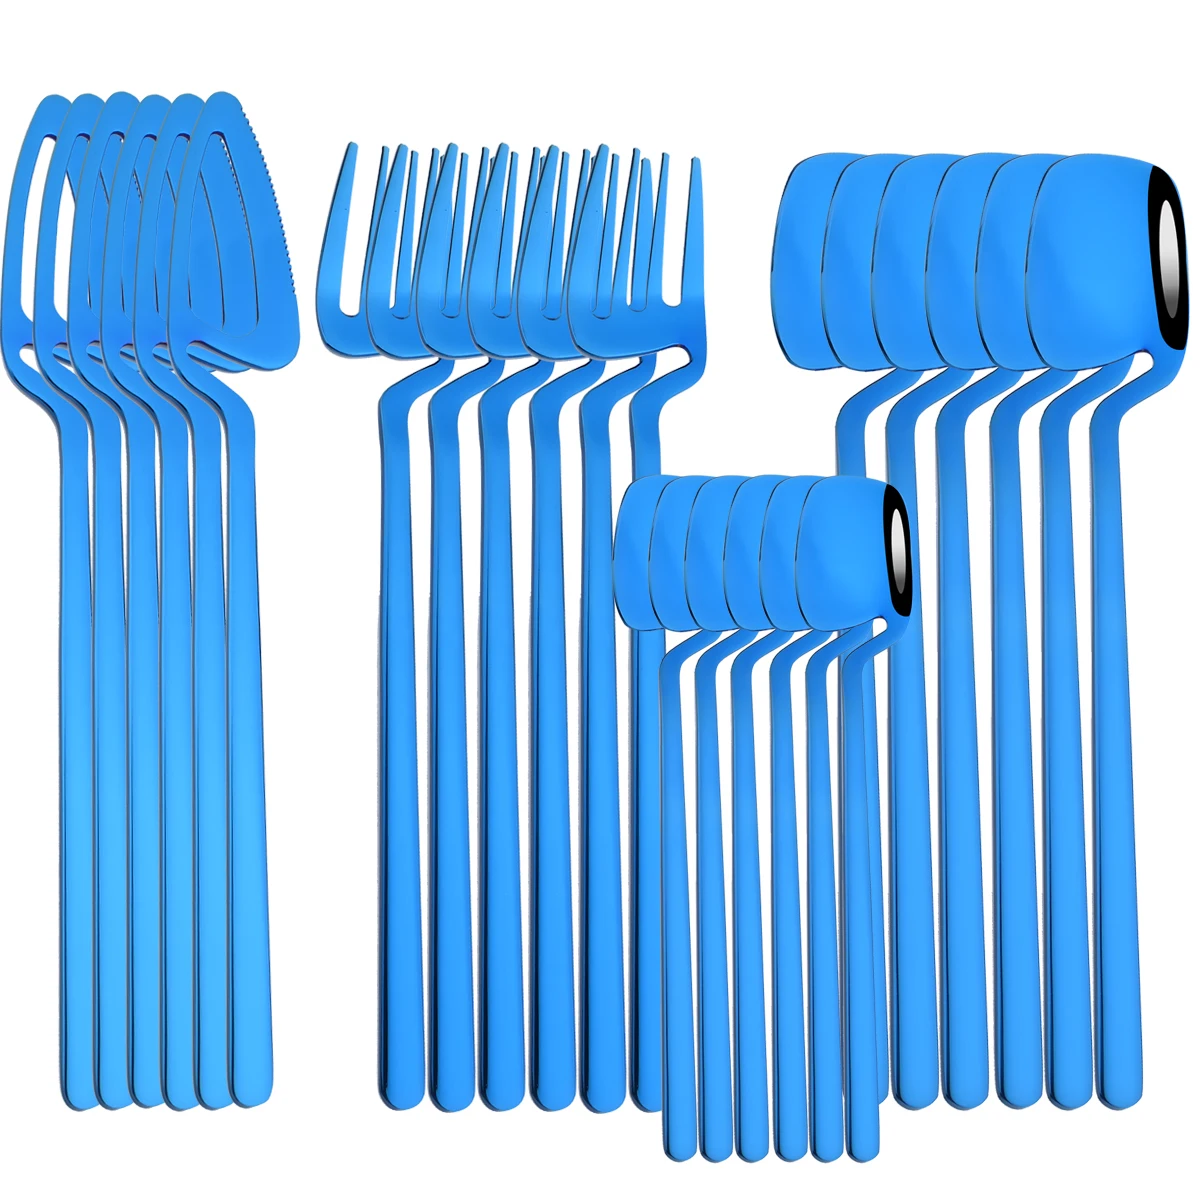 

24Pcs Tableware Set 304 Stainless Steel Cutlery Knives Forks Tea Spoons Dinner Flatware Set Kitchen Silverware Dinnerware